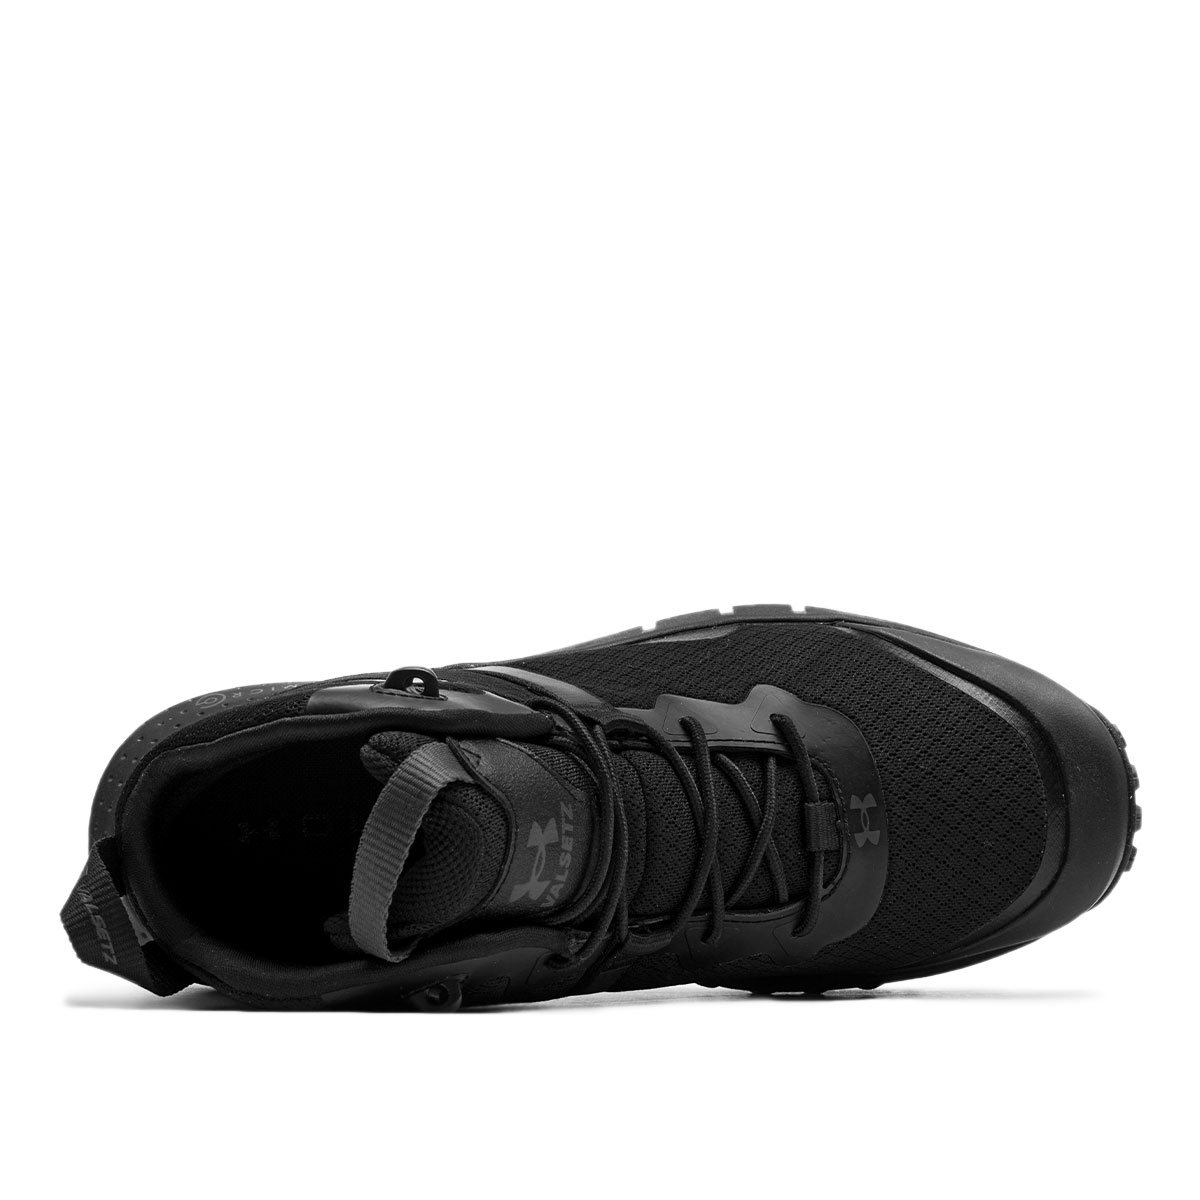 Under Armour UA Micro G Valsetz Mid Мъжки спортни обувки 3023741-001